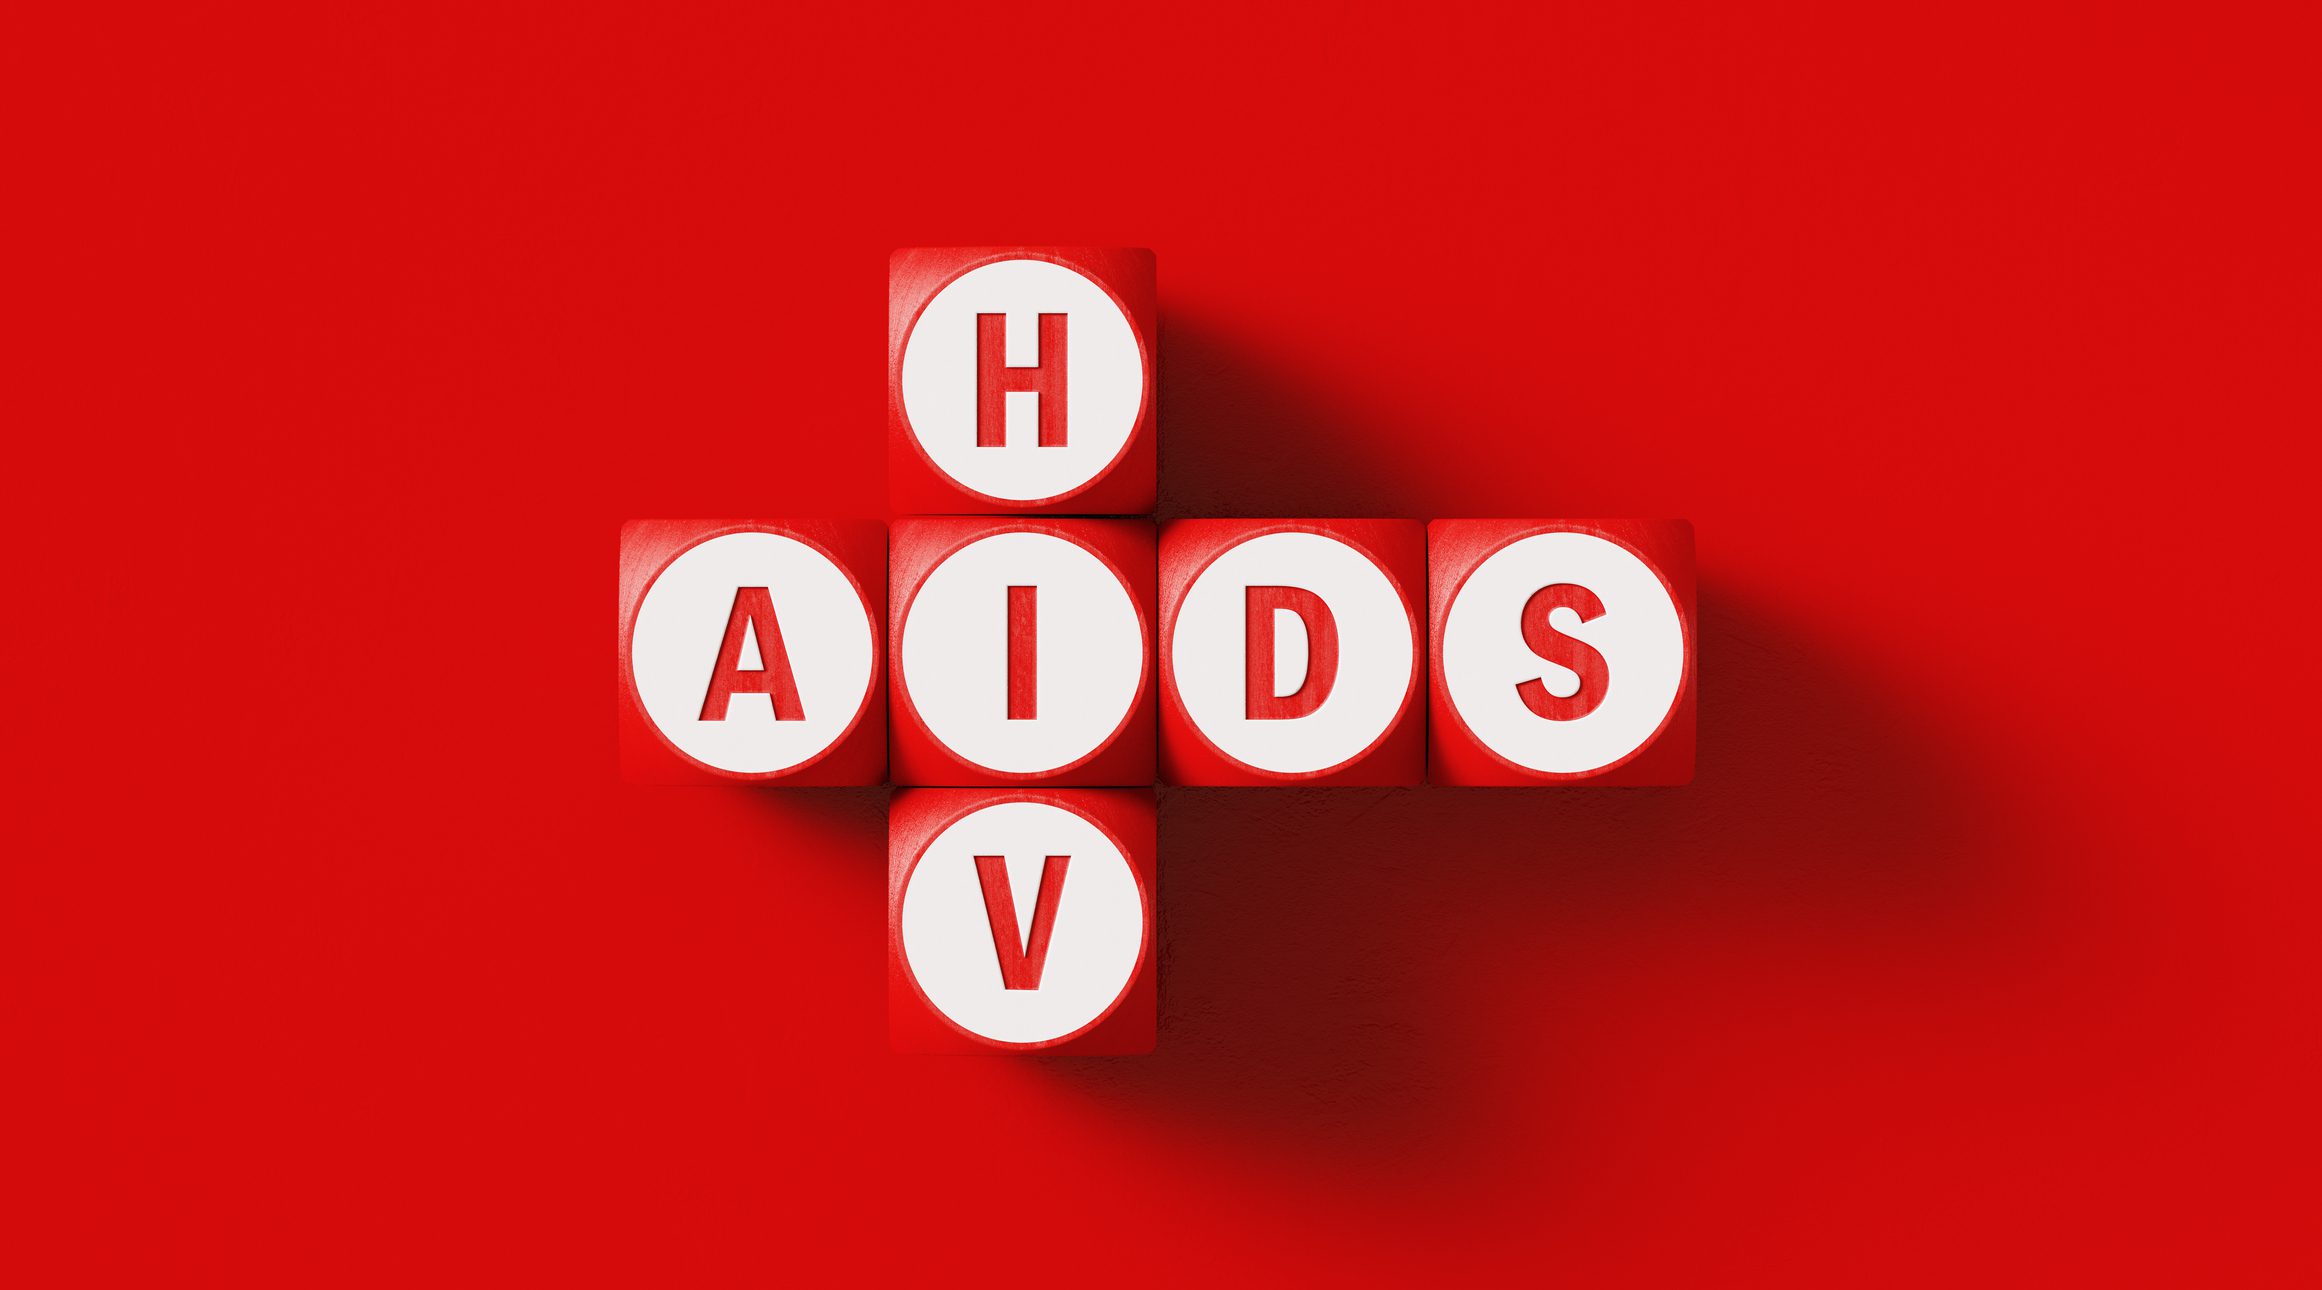 VIH SIDA